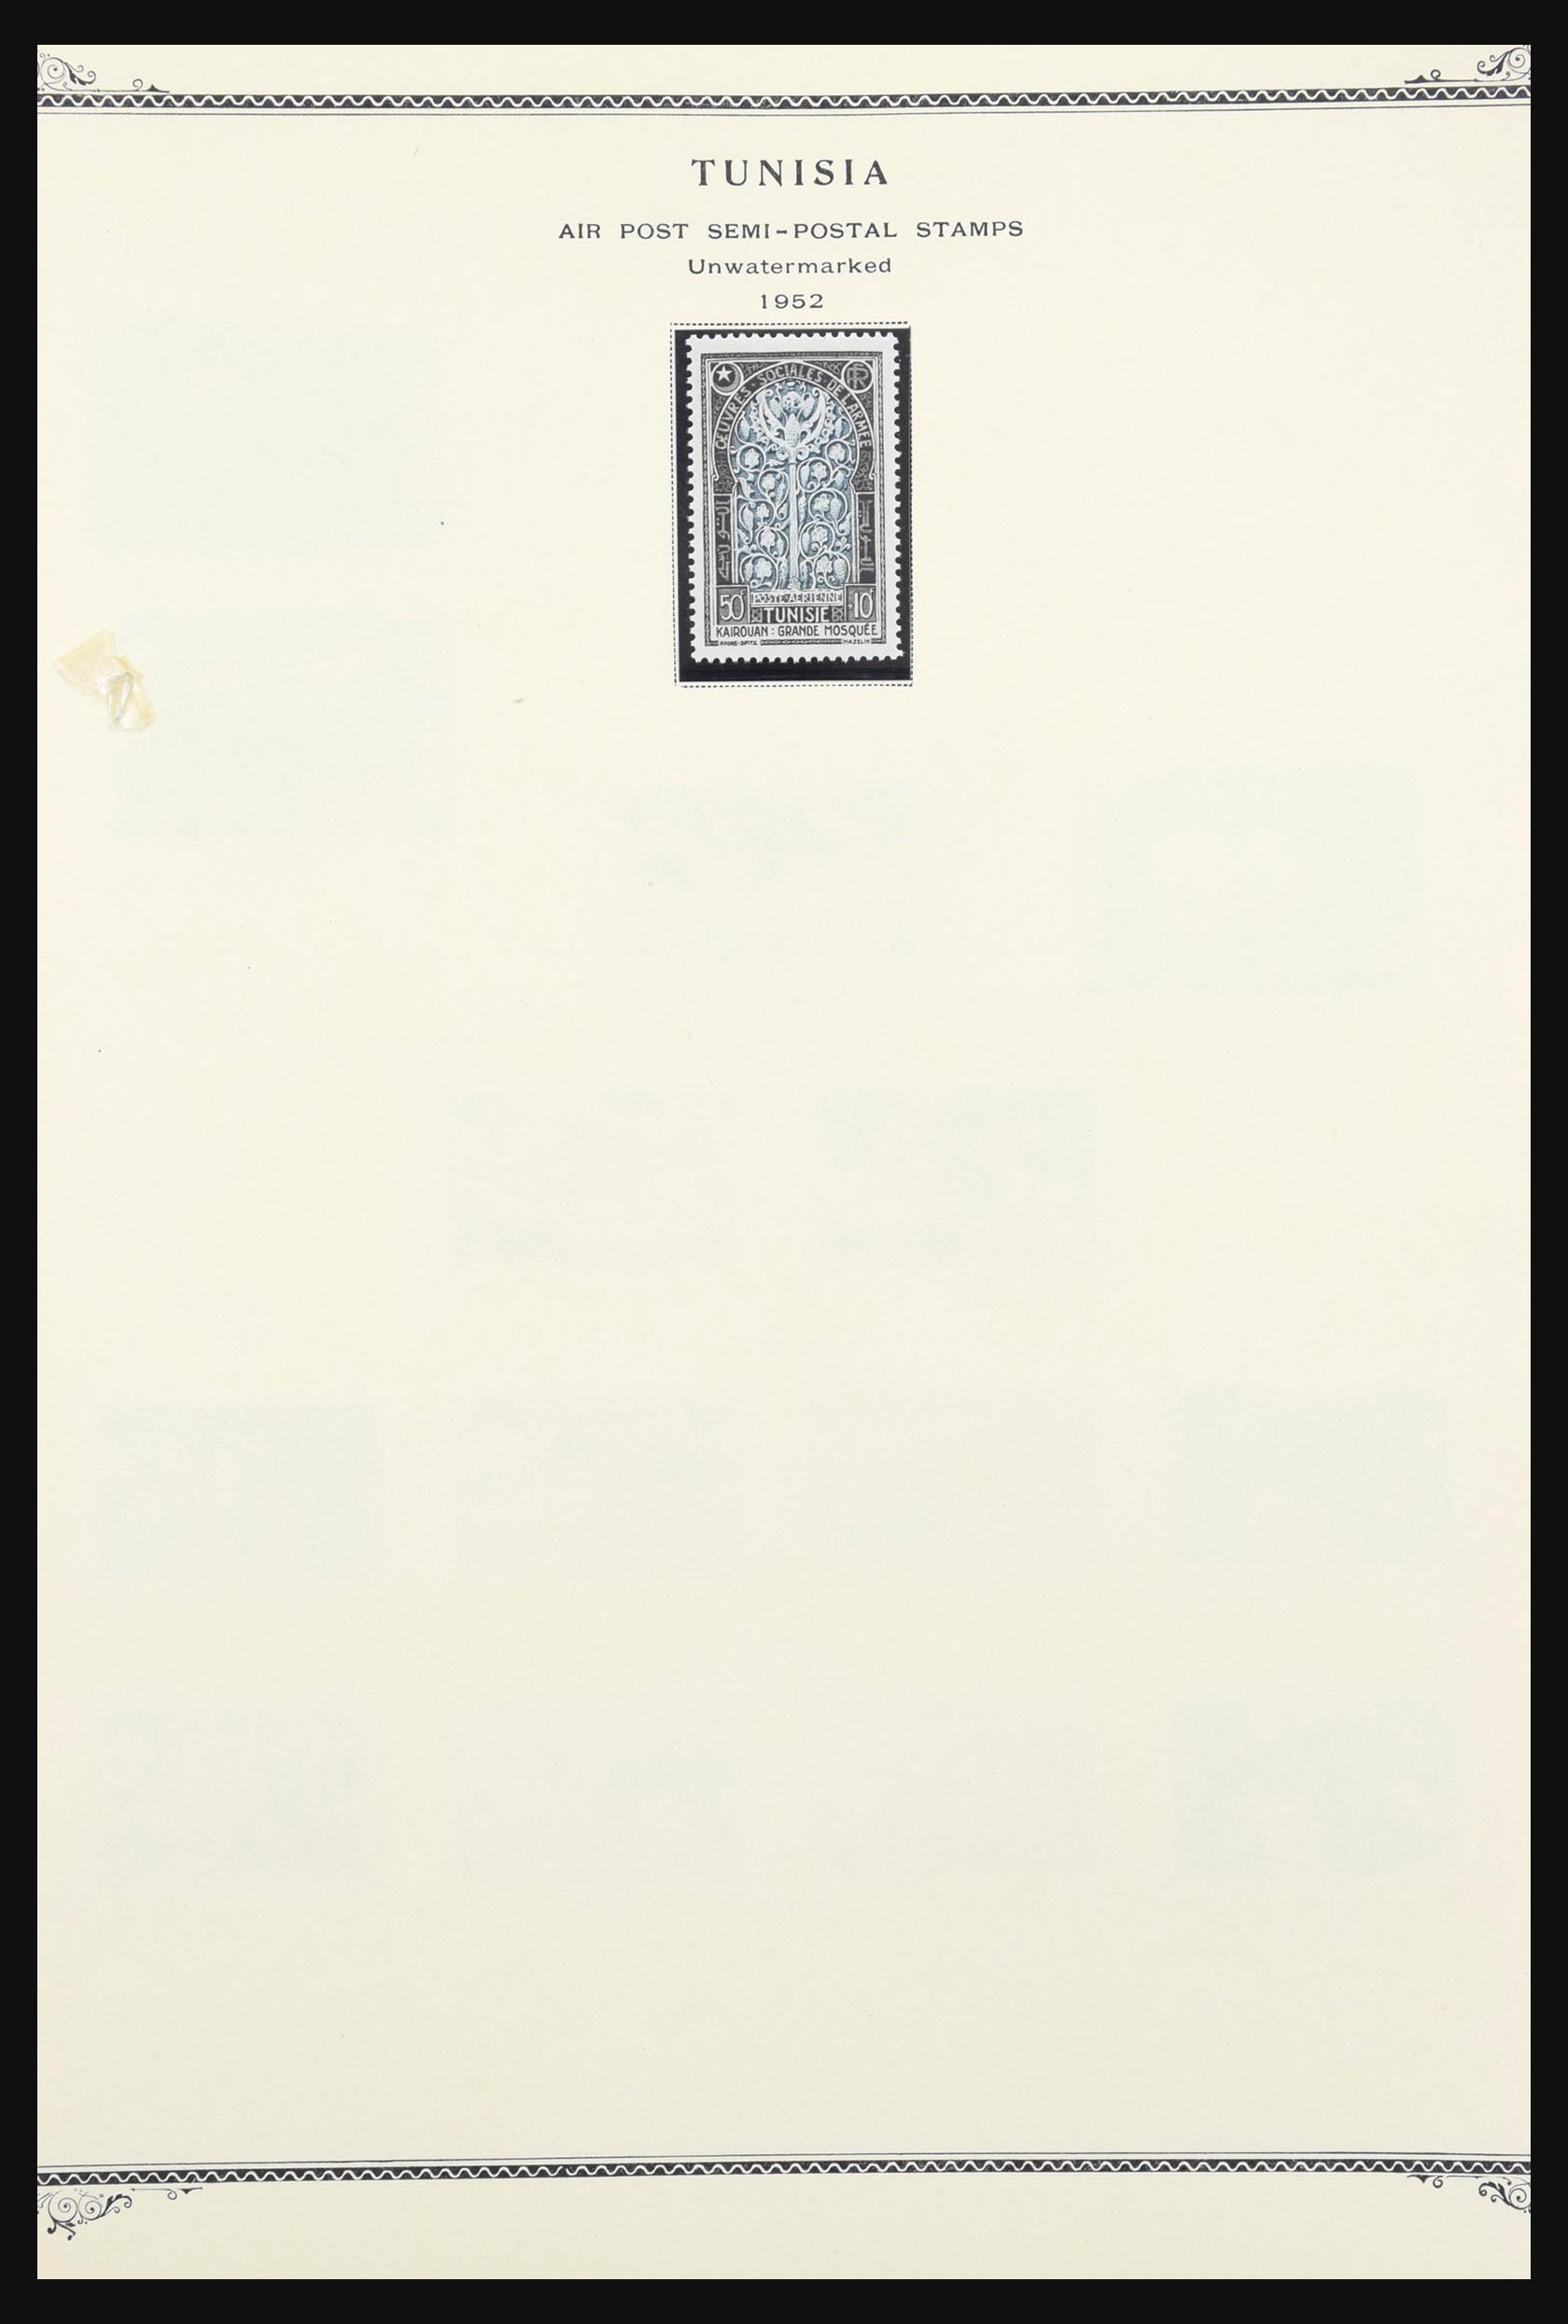 31308 051 - 31308 Tunisia 1888-1967.